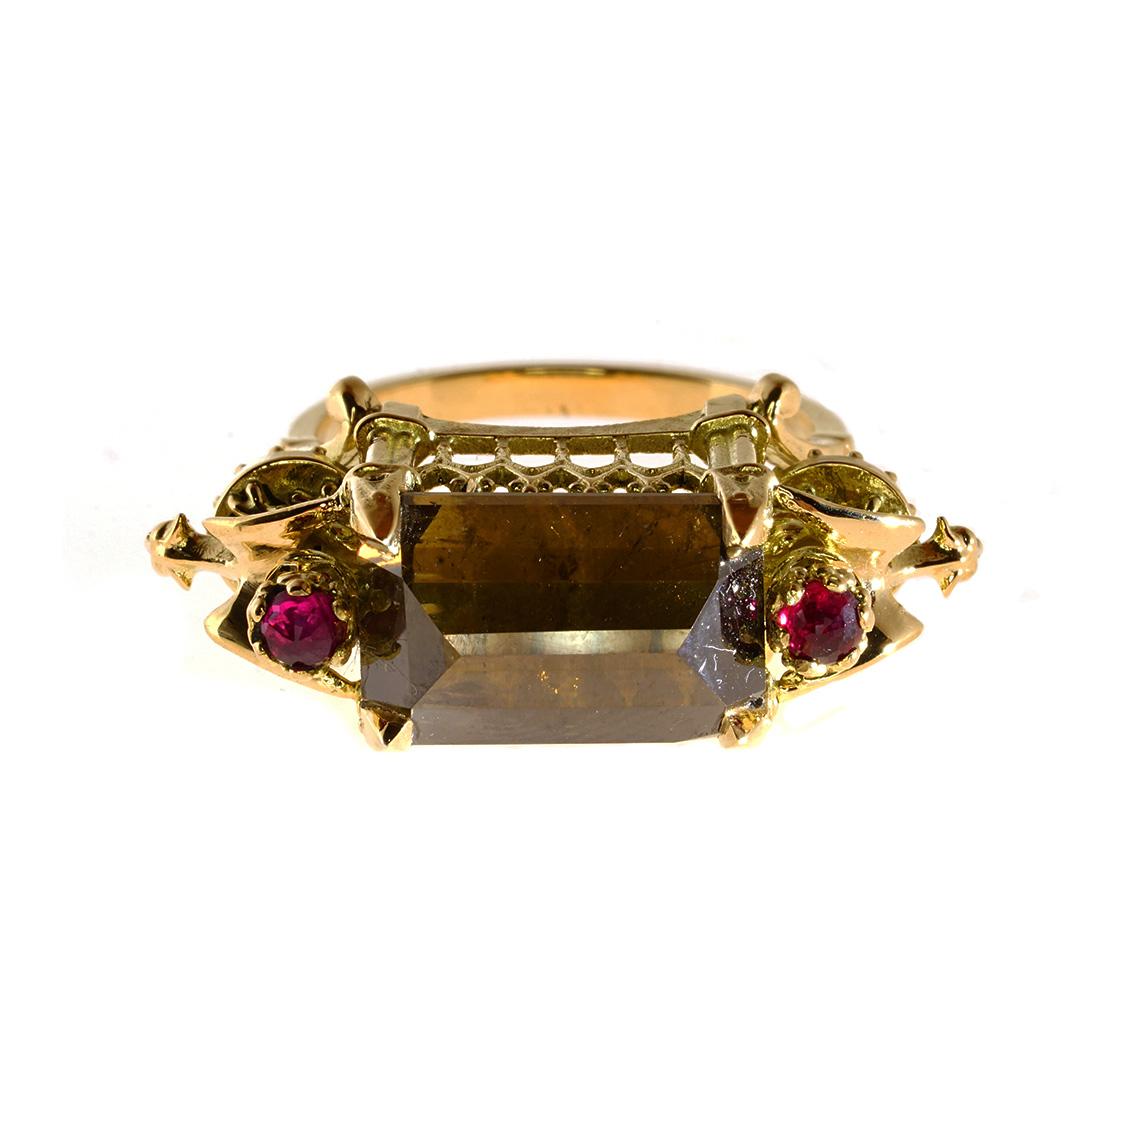 Emerald Cut Ritual Cathedral Ring in 18 Karat Yellow Gold, Cognac Diamond and Rubies